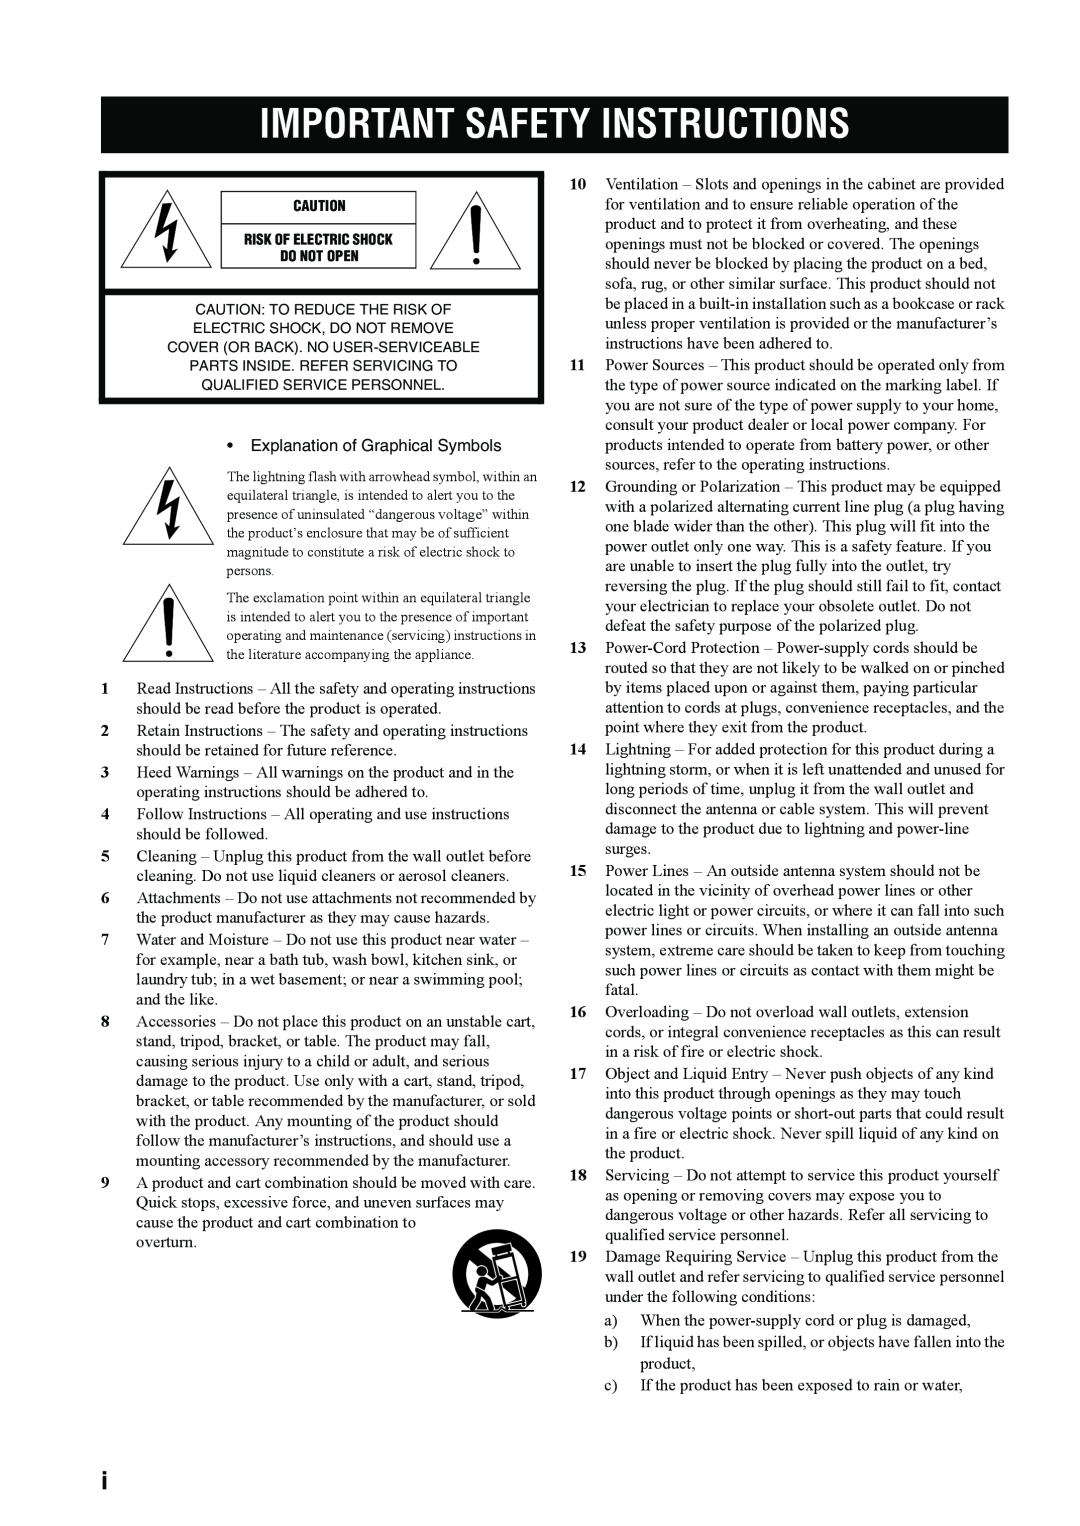 Yamaha RX-V4600 owner manual Important Safety Instructions, Explanation of Graphical Symbols 